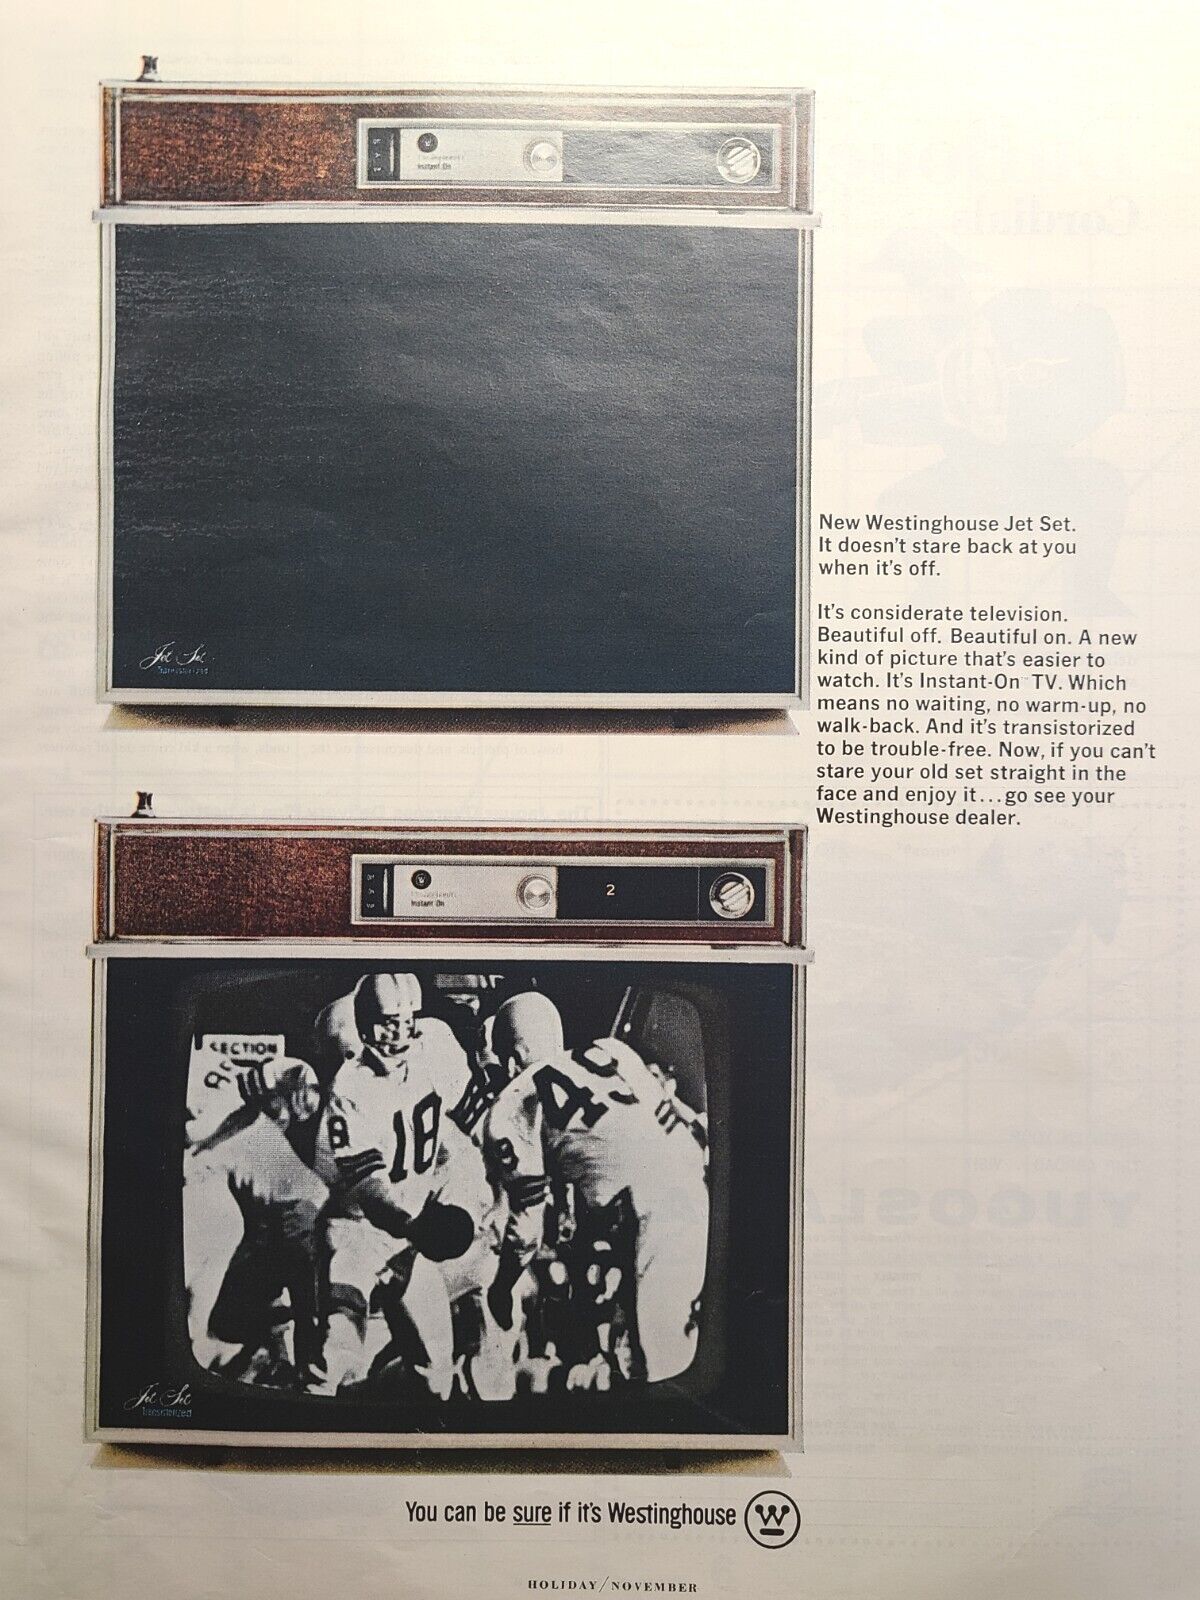 Westinghouse Jet Set Television Instant-On Transistorized Vintage Print Ad 1965